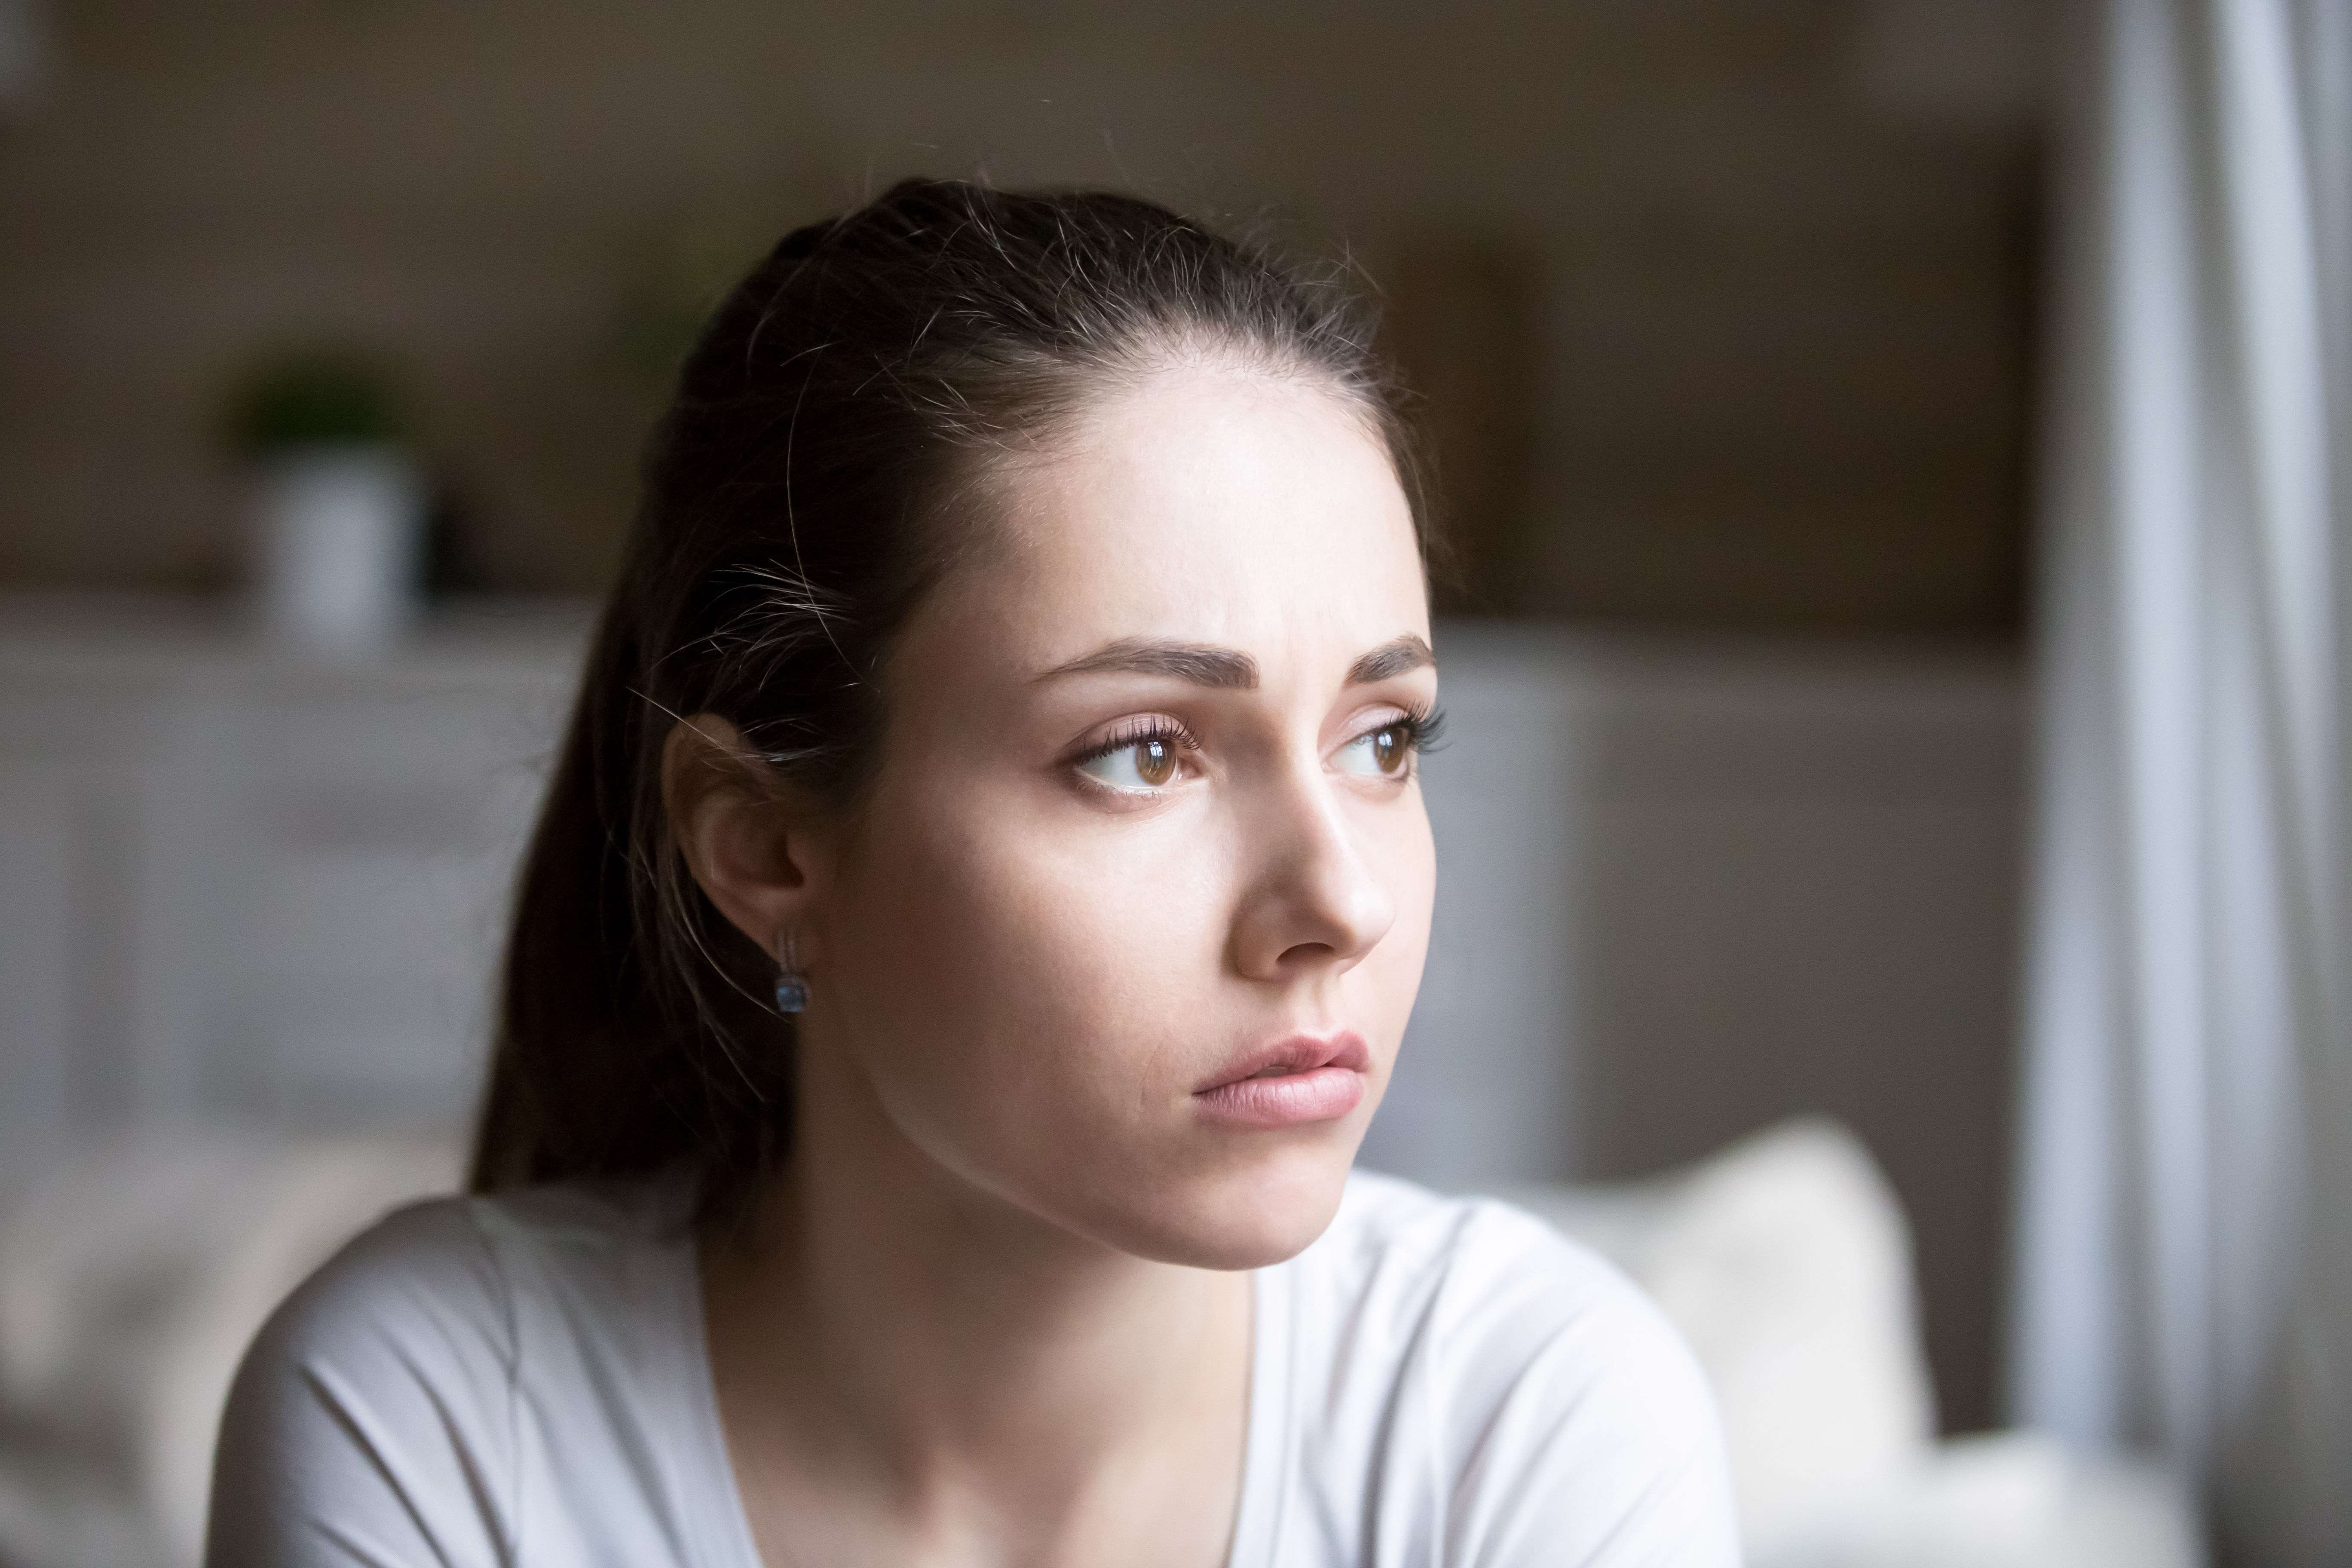 Jeune femme à l'air triste | Source : Shutterstock